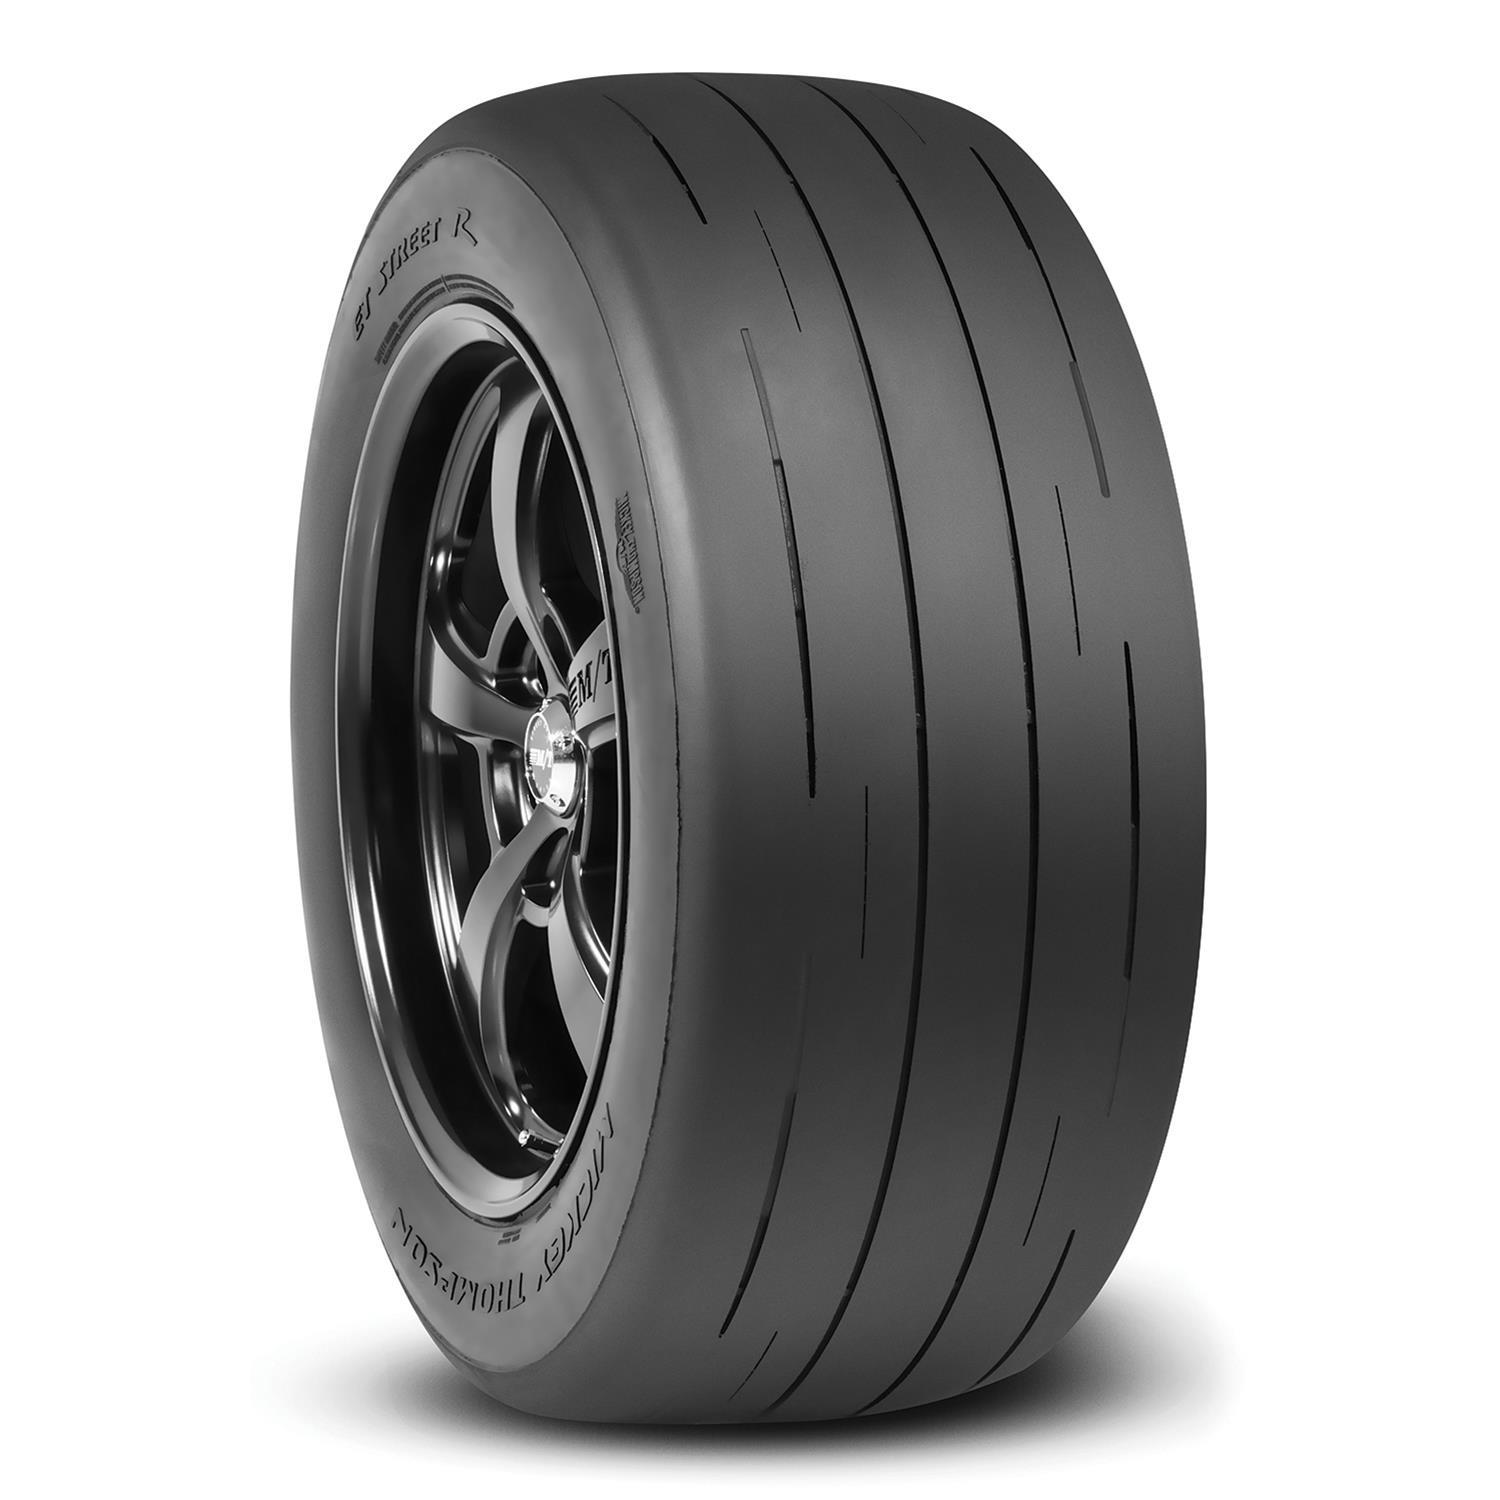 P275/50R15 ET Street R Tire - 255600